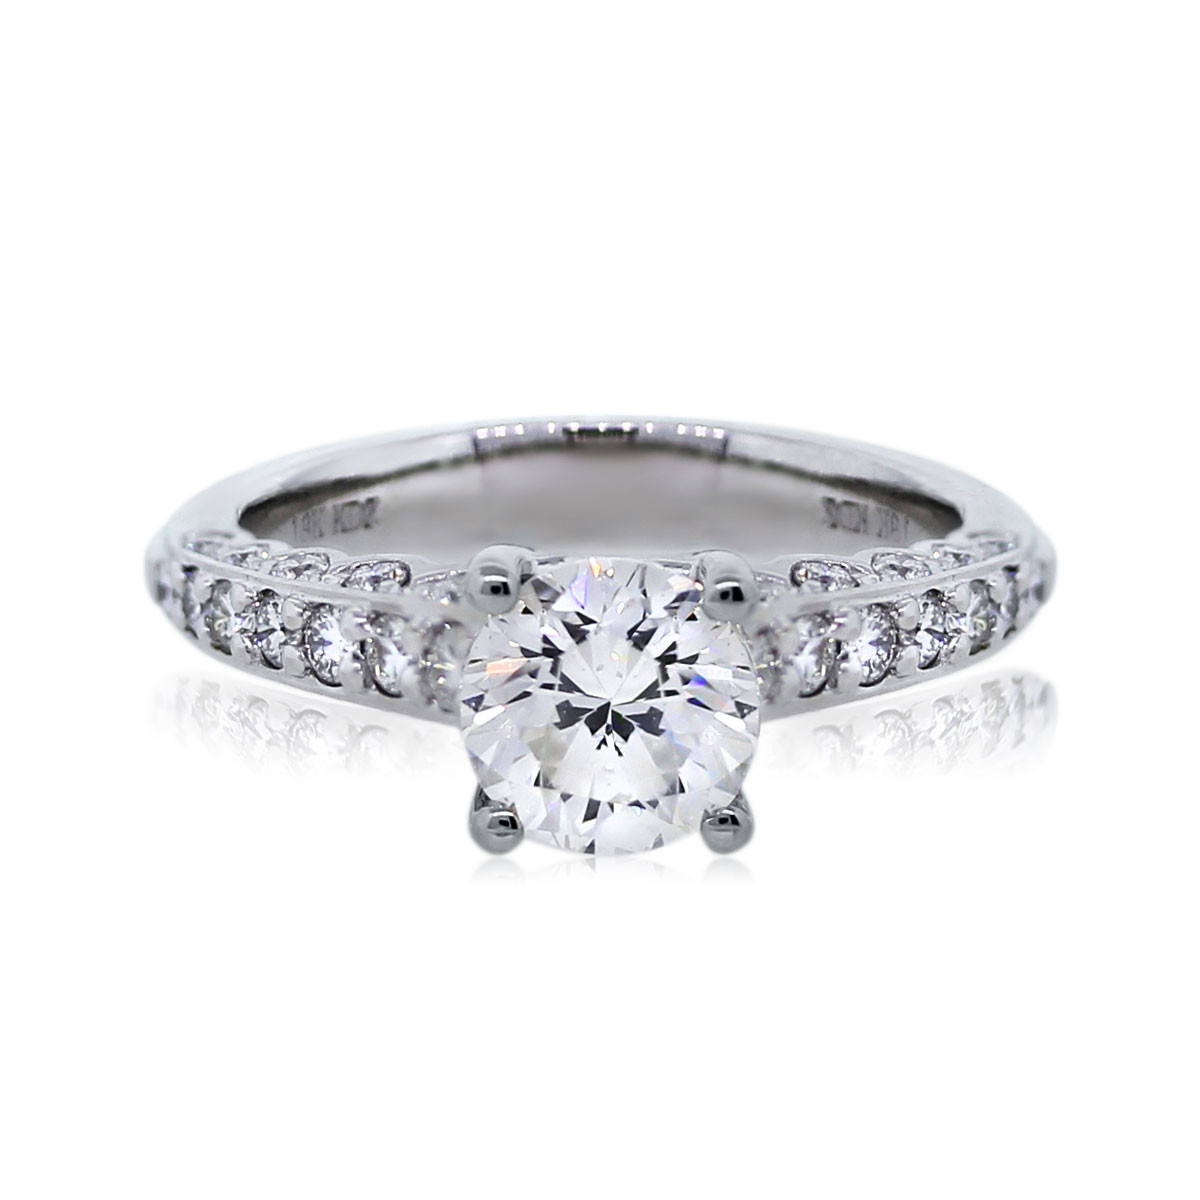 Round Diamond Engagement Rings
 18k White Gold 1 16ct Round Brilliant Diamond Engagement Ring